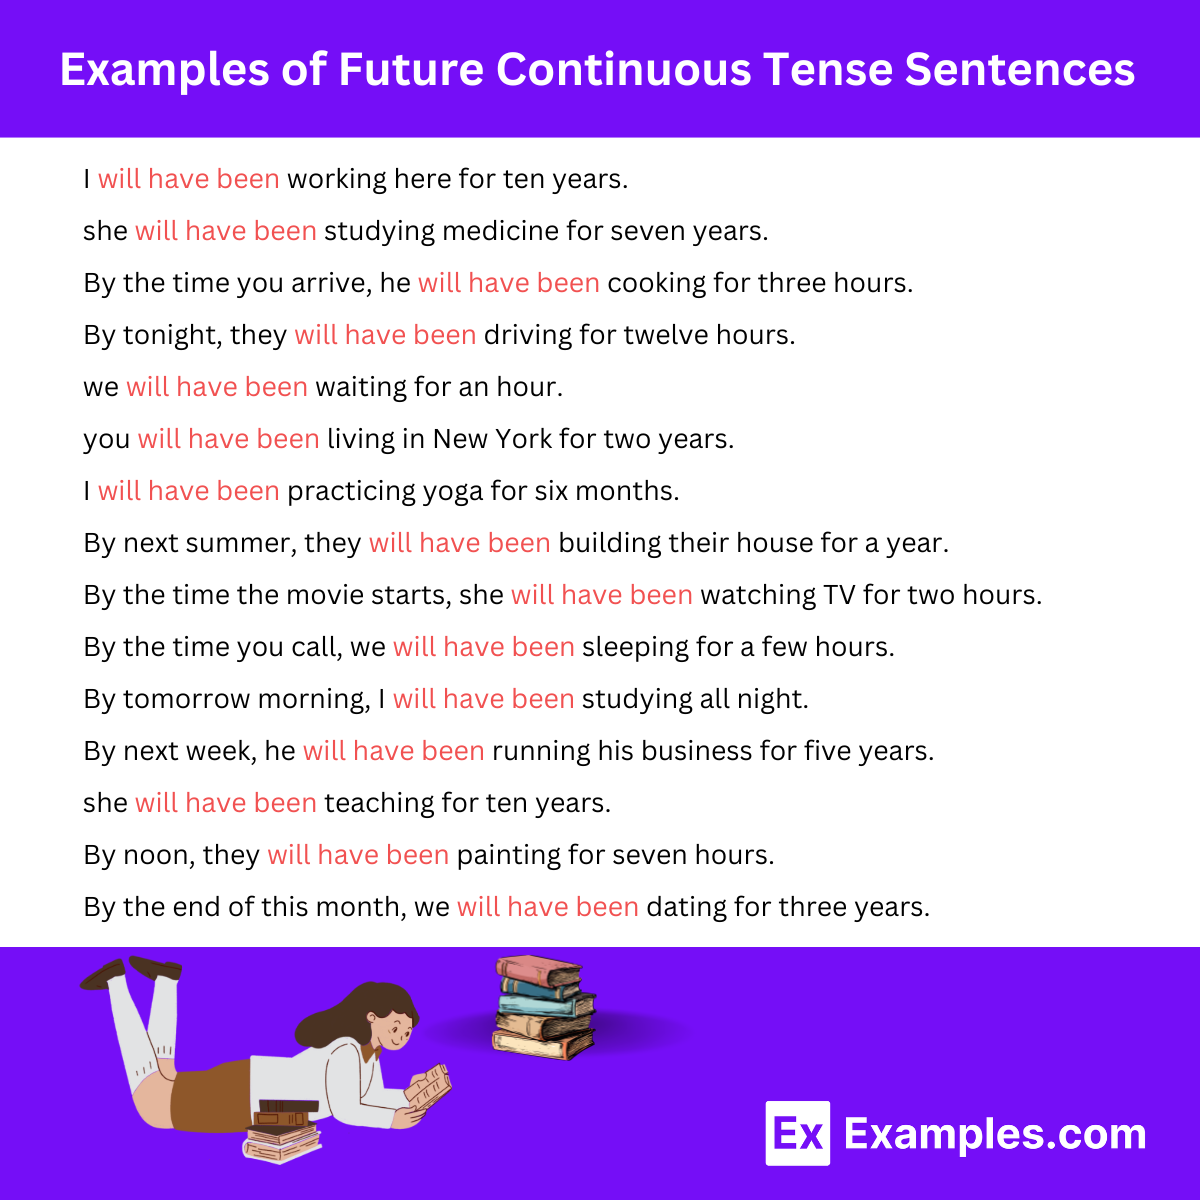 Examples of Future Continuous Tense Sentences